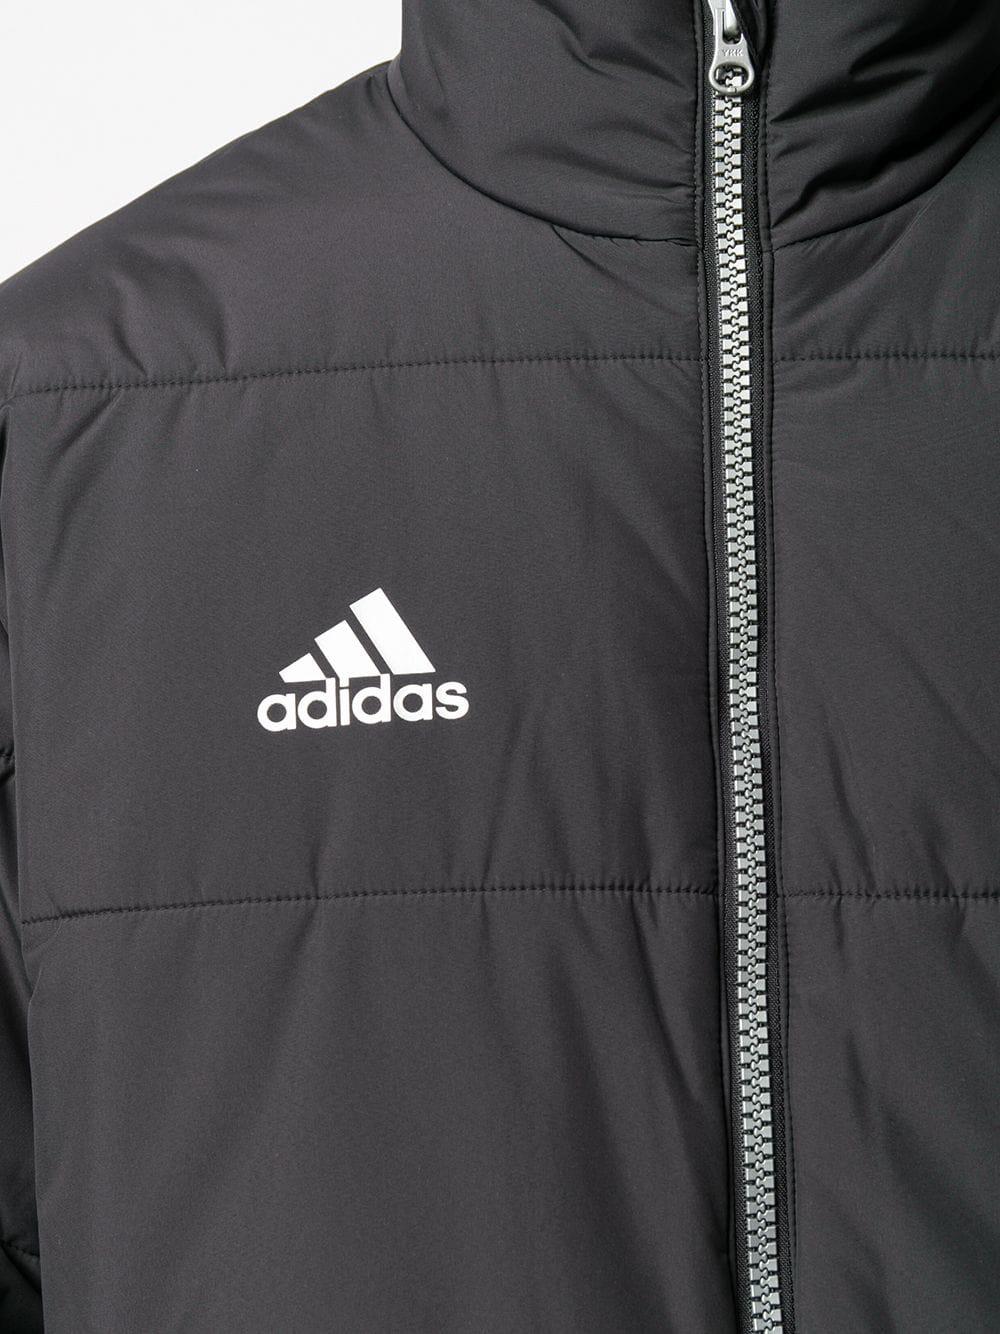 Gosha Rubchinskiy Black Adidas Originals Edition Puffer Jacket for Men -  Lyst